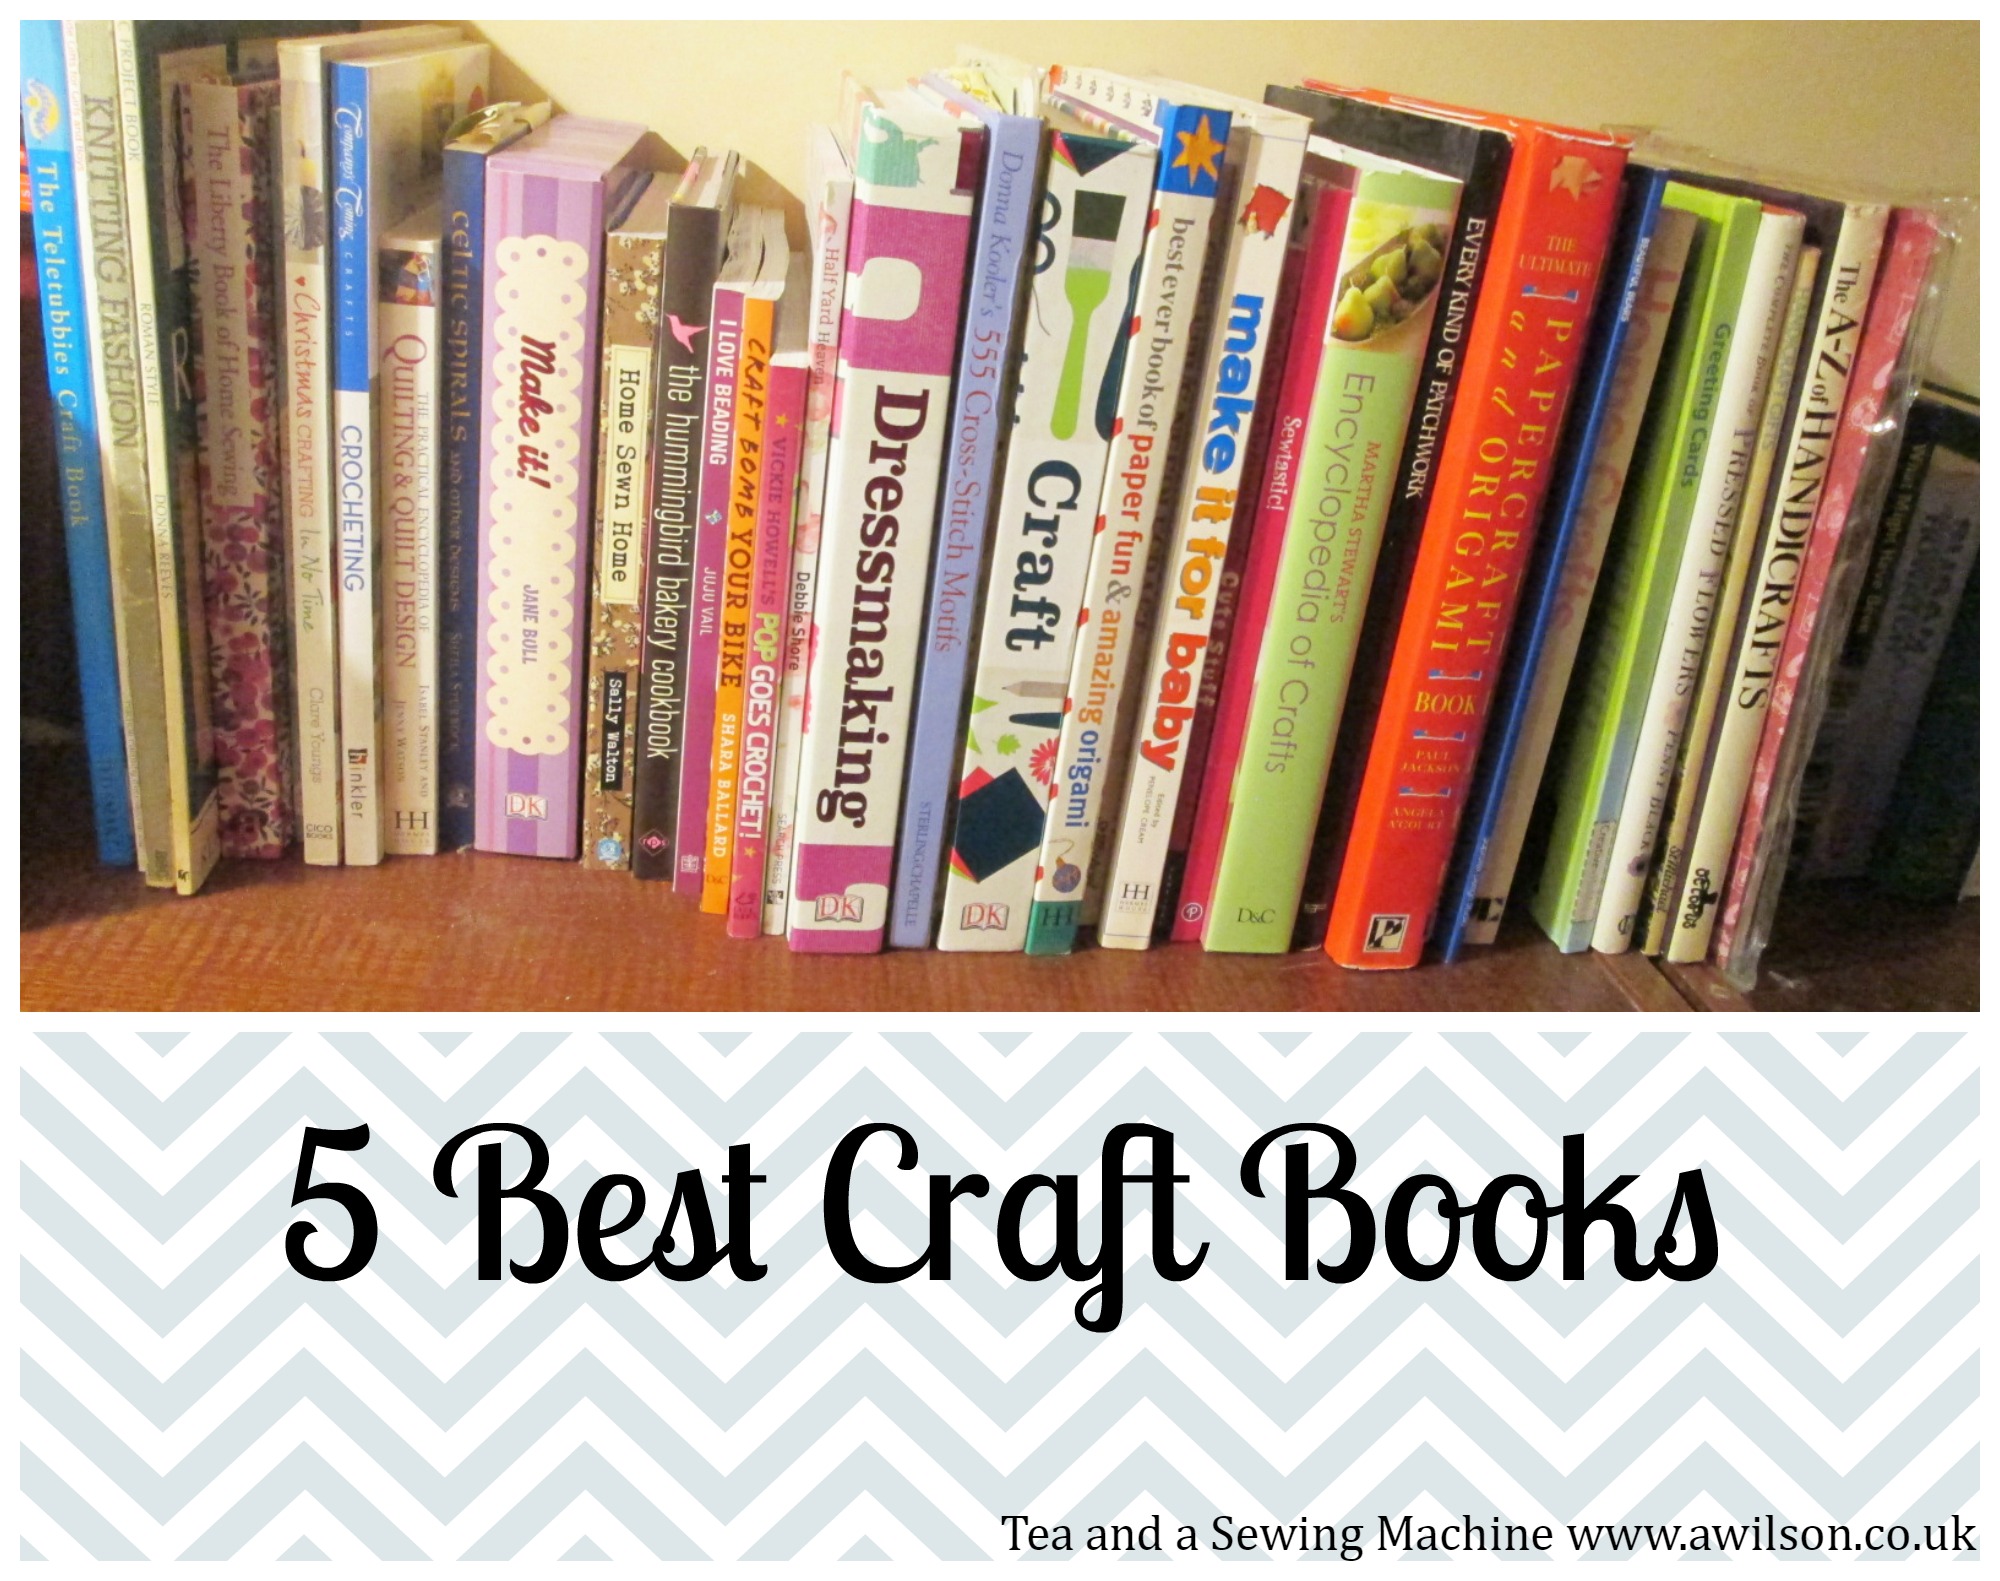 5 best craft books